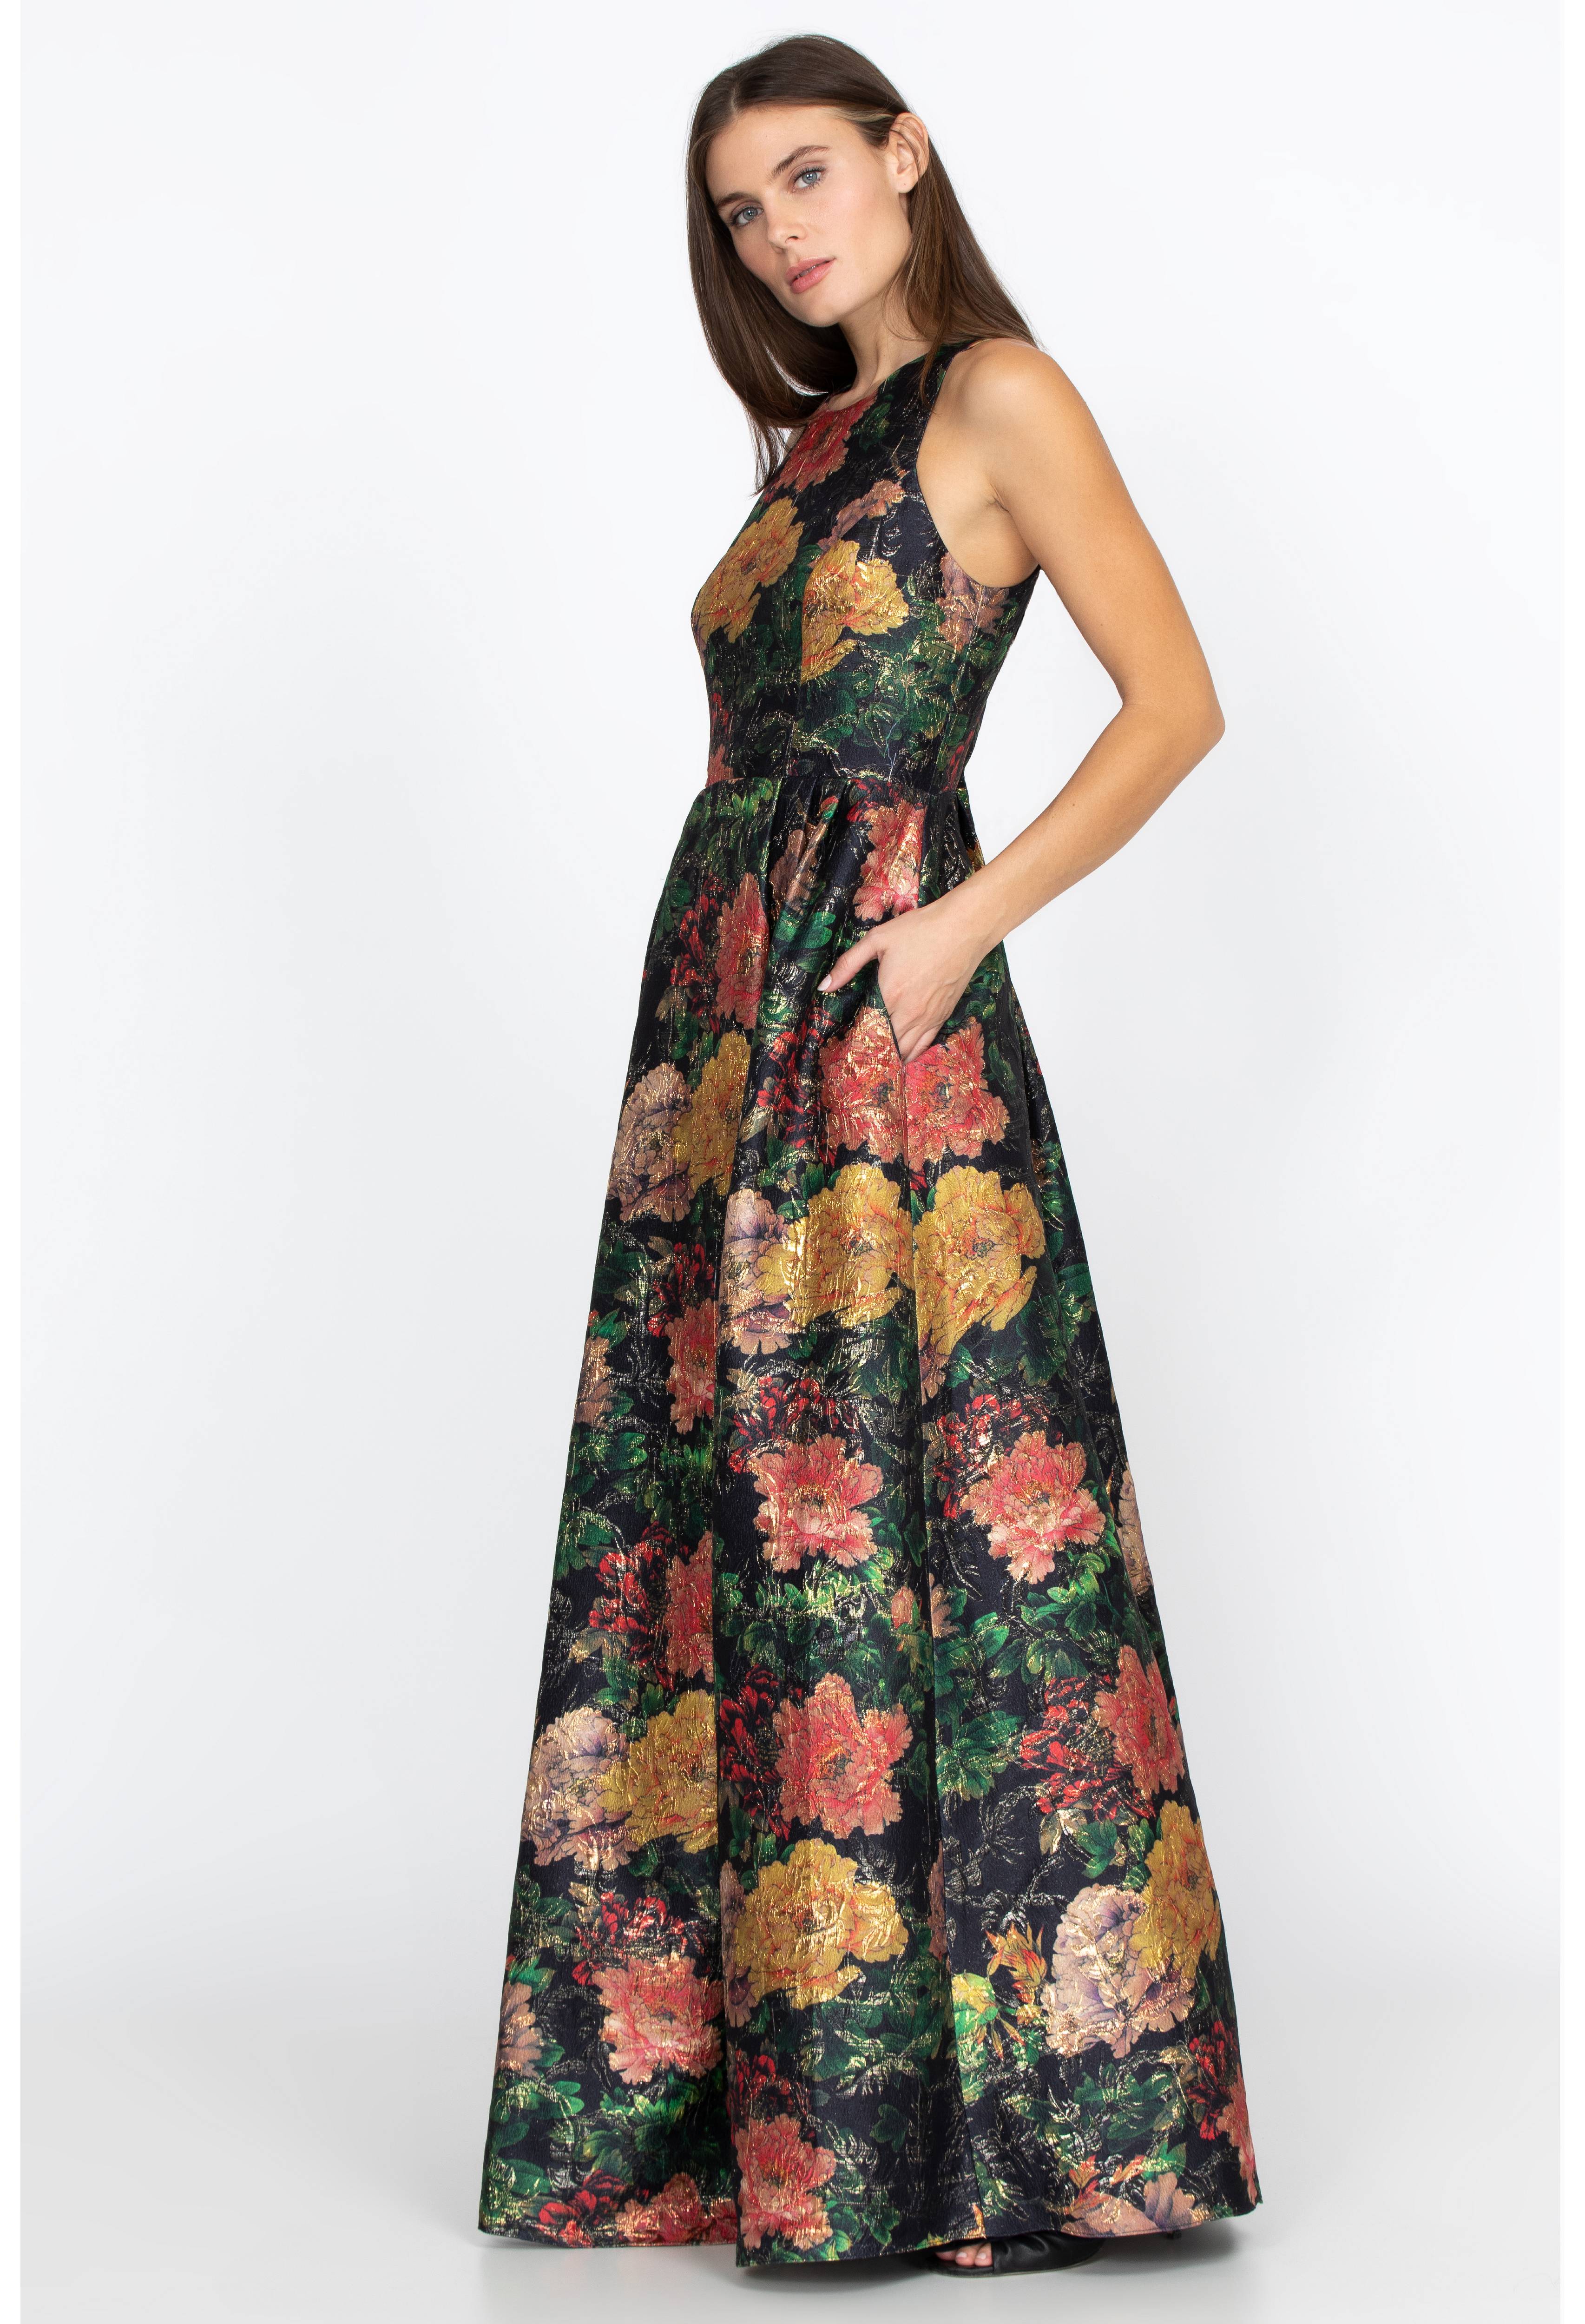 Bayani Jacquard Dress, , large image number 3